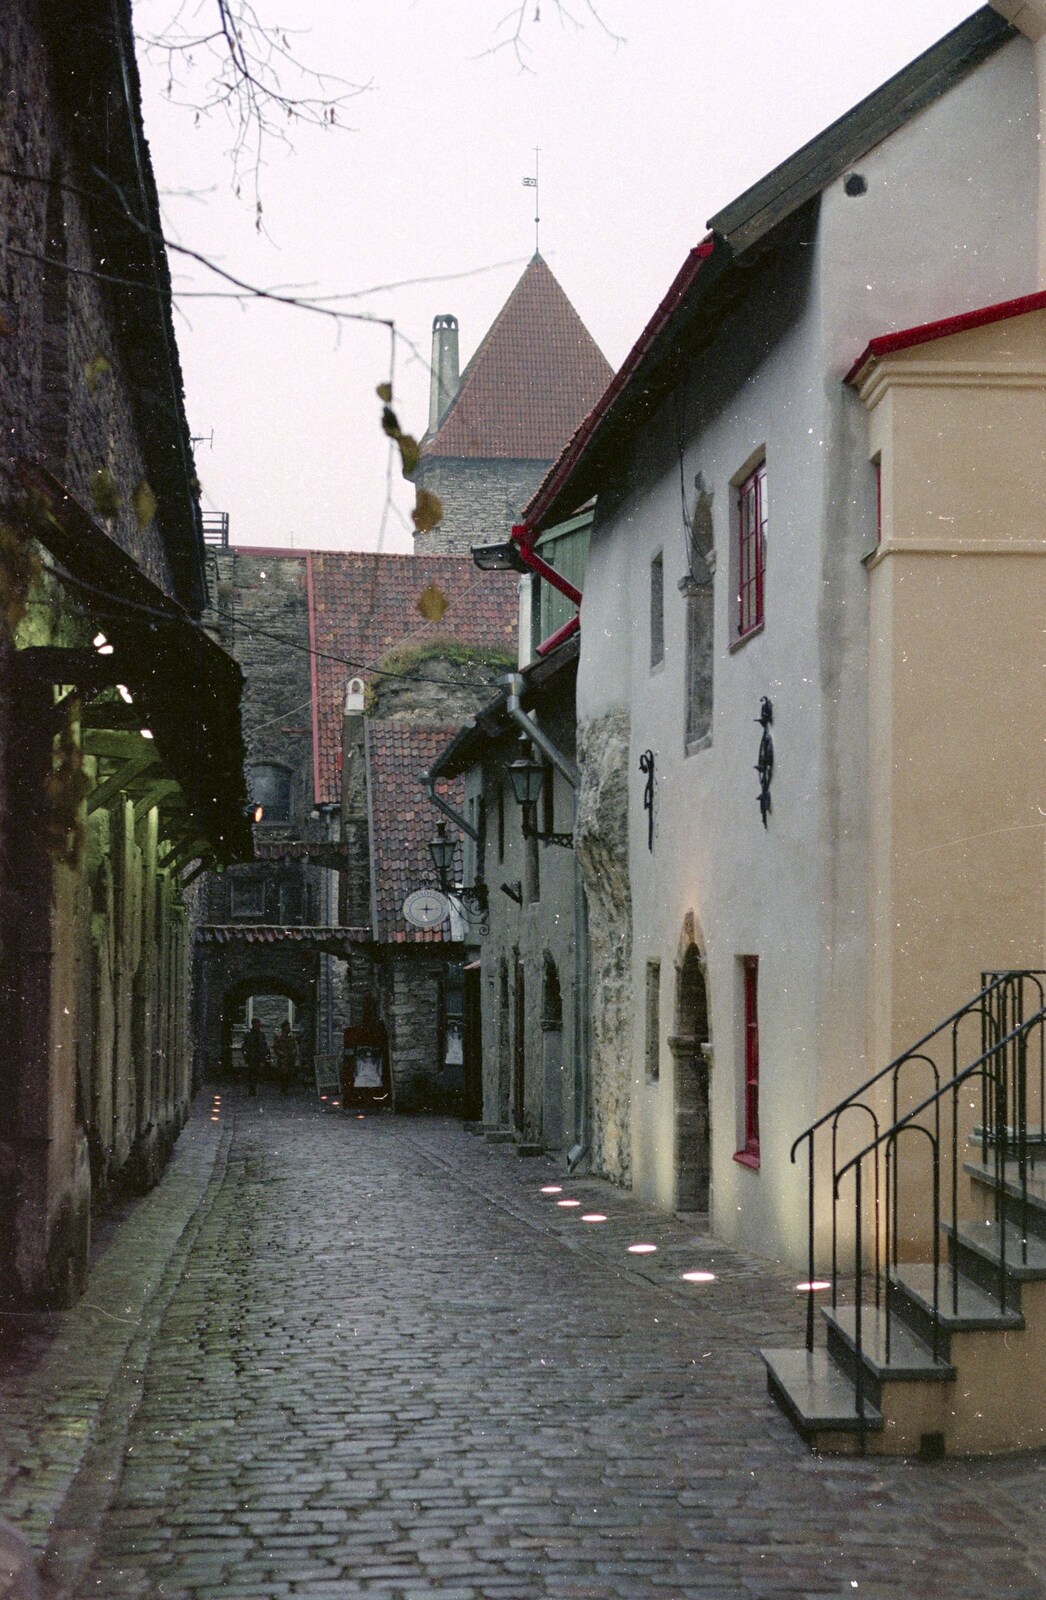 A Tallinn back-street near the city walls from A Day Trip to Tallinn, Estonia - 2nd December 1999